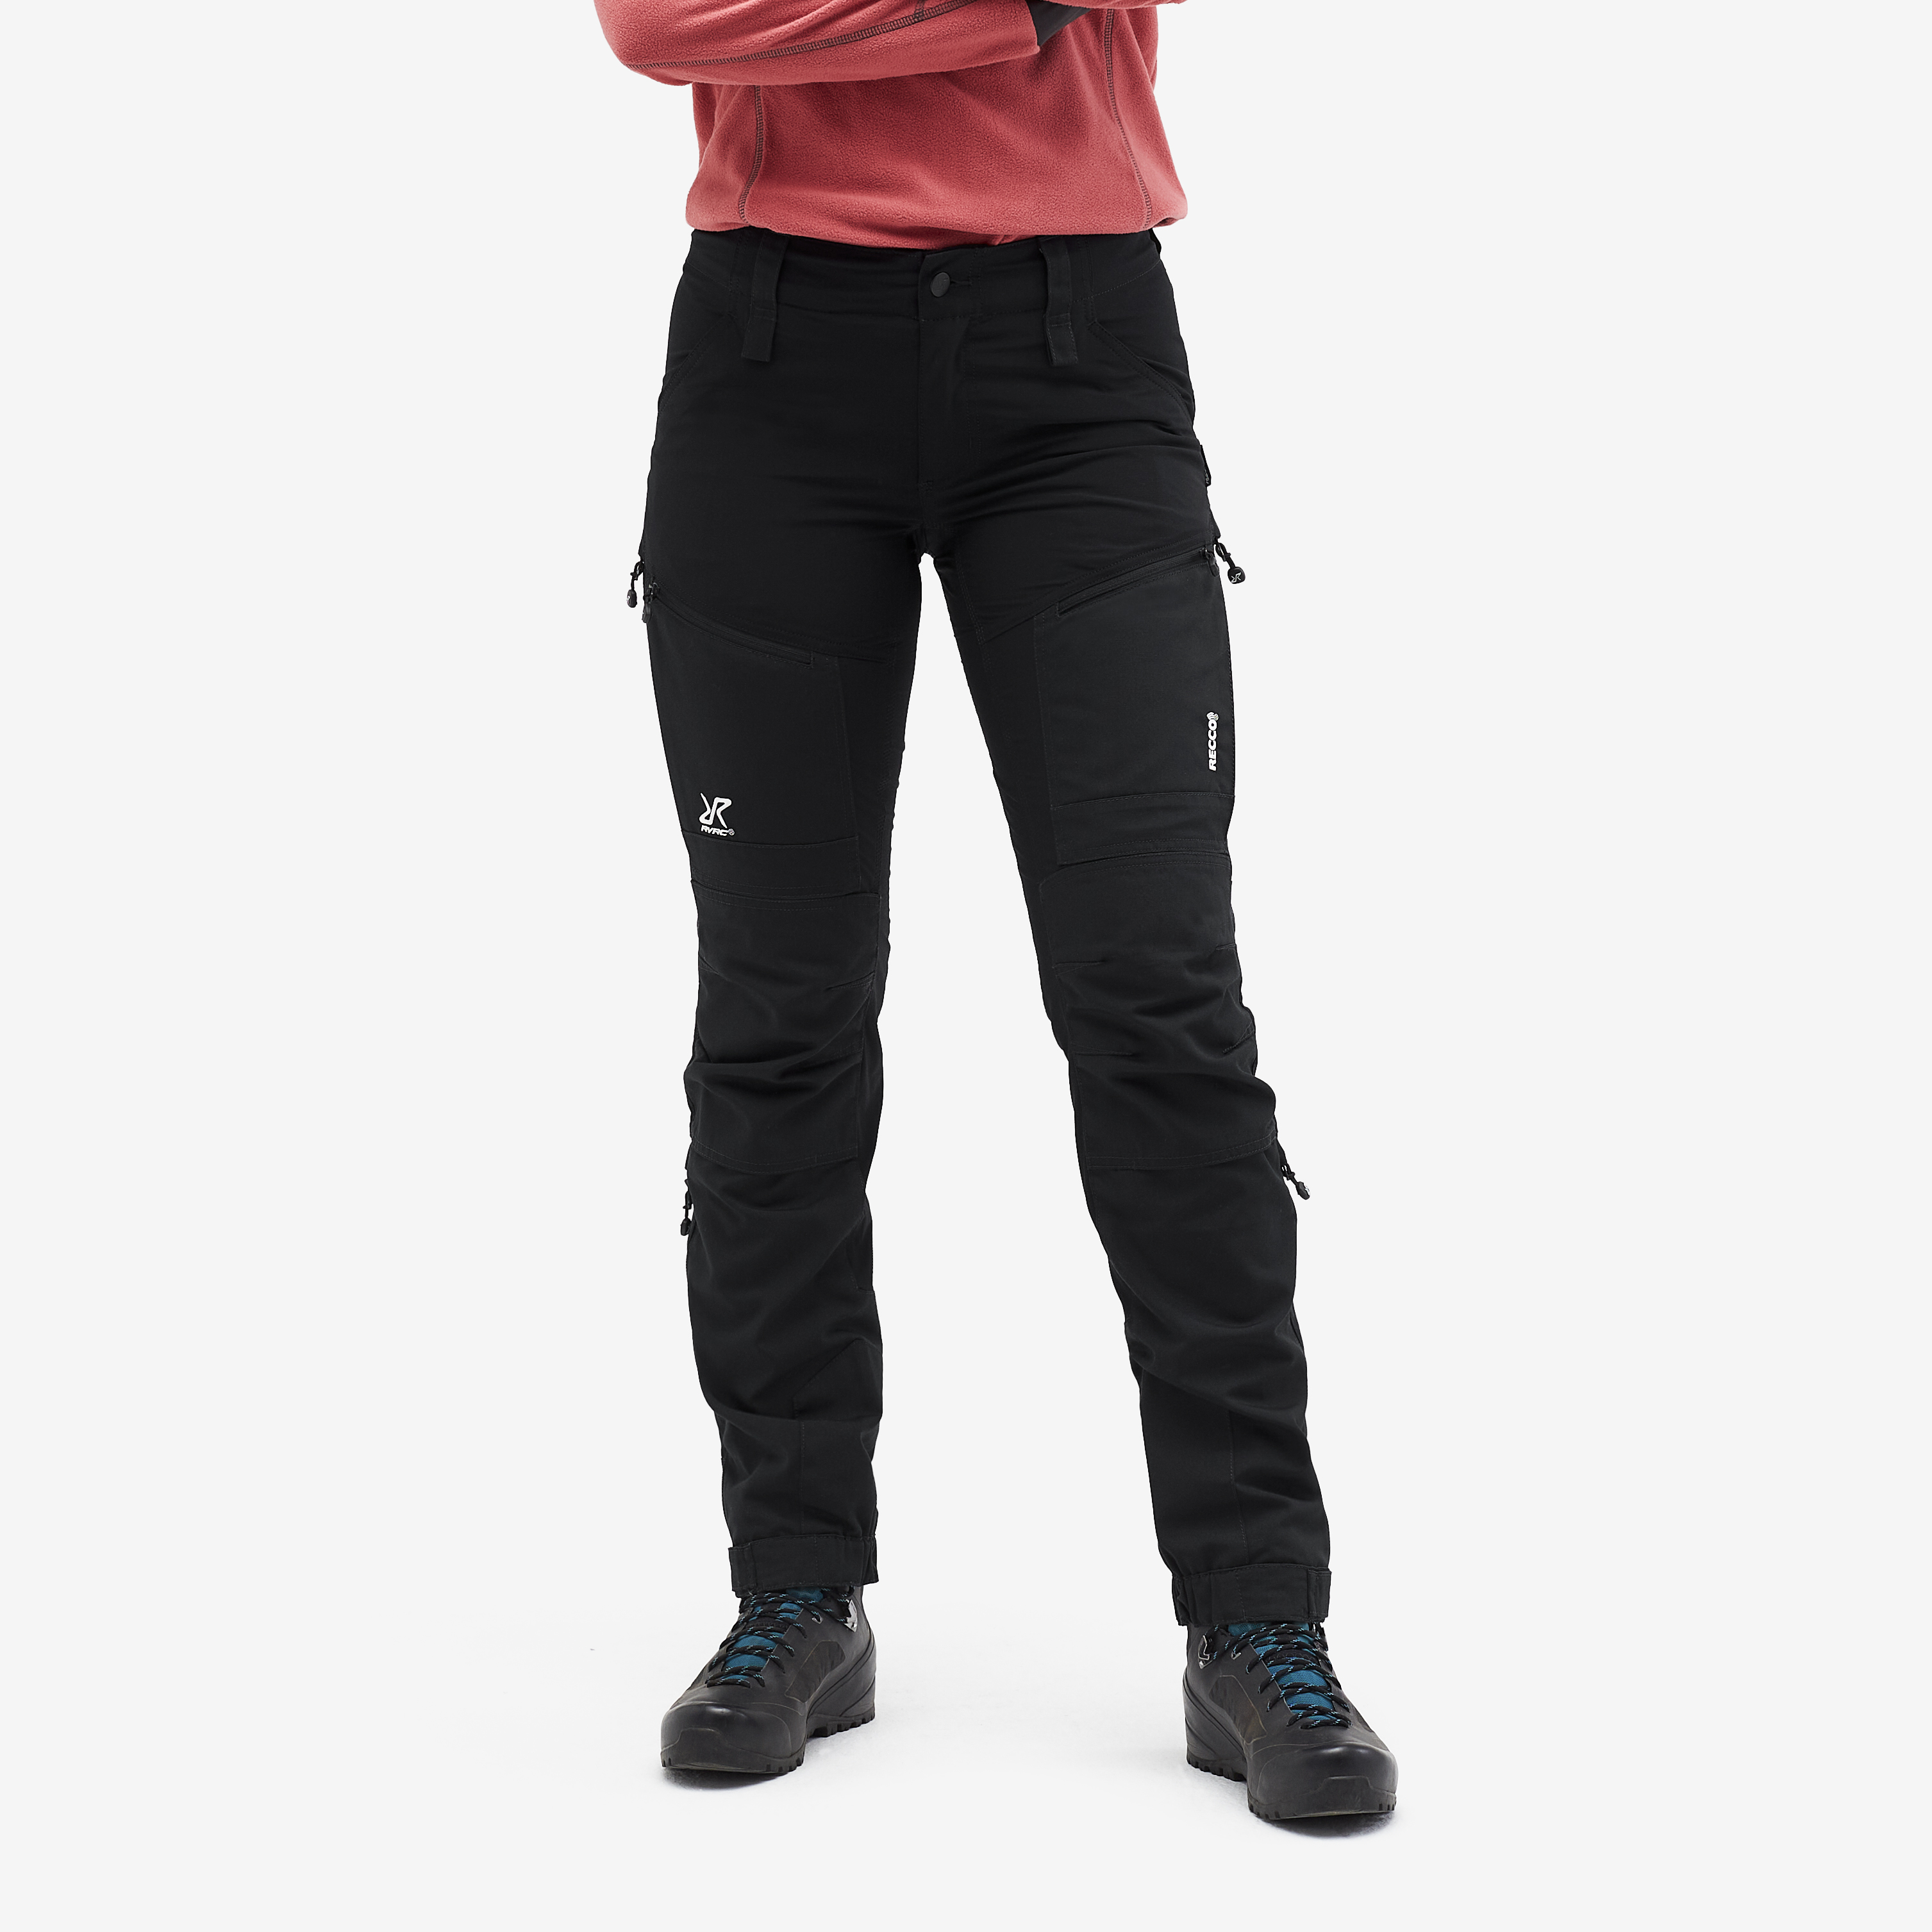 RVRC GP Pro Rescue Pants Black Edition 2.0 Women